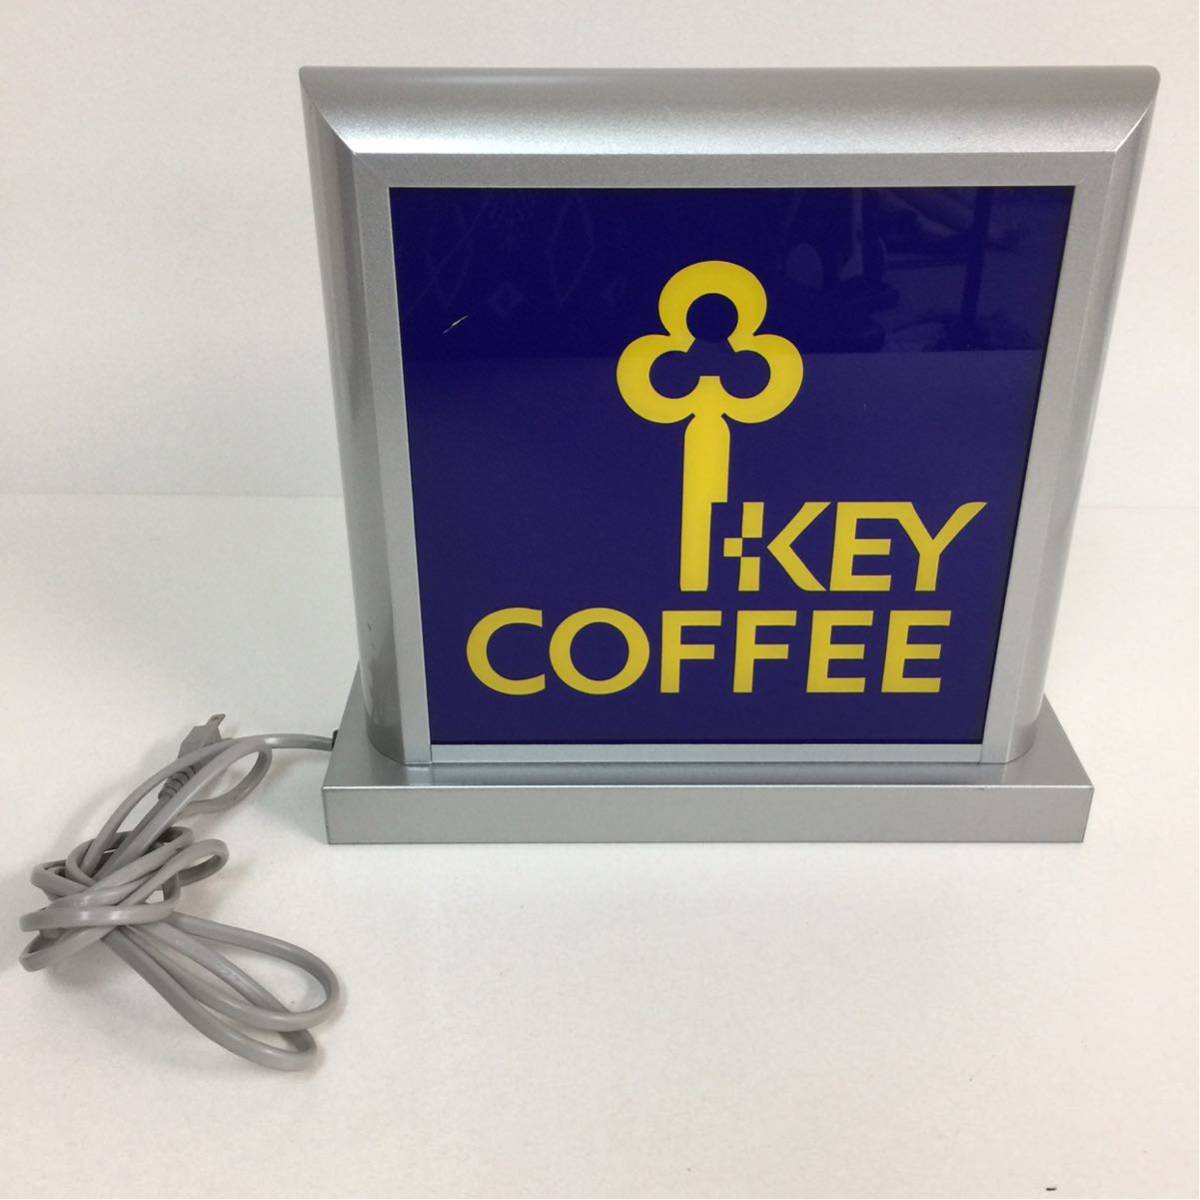 404 KEY COFFEE キーコーヒー 電飾看板 昭和レトロ 看板 電光看板 コレクション ディスプレイ スタンド インテリア 点灯確認済